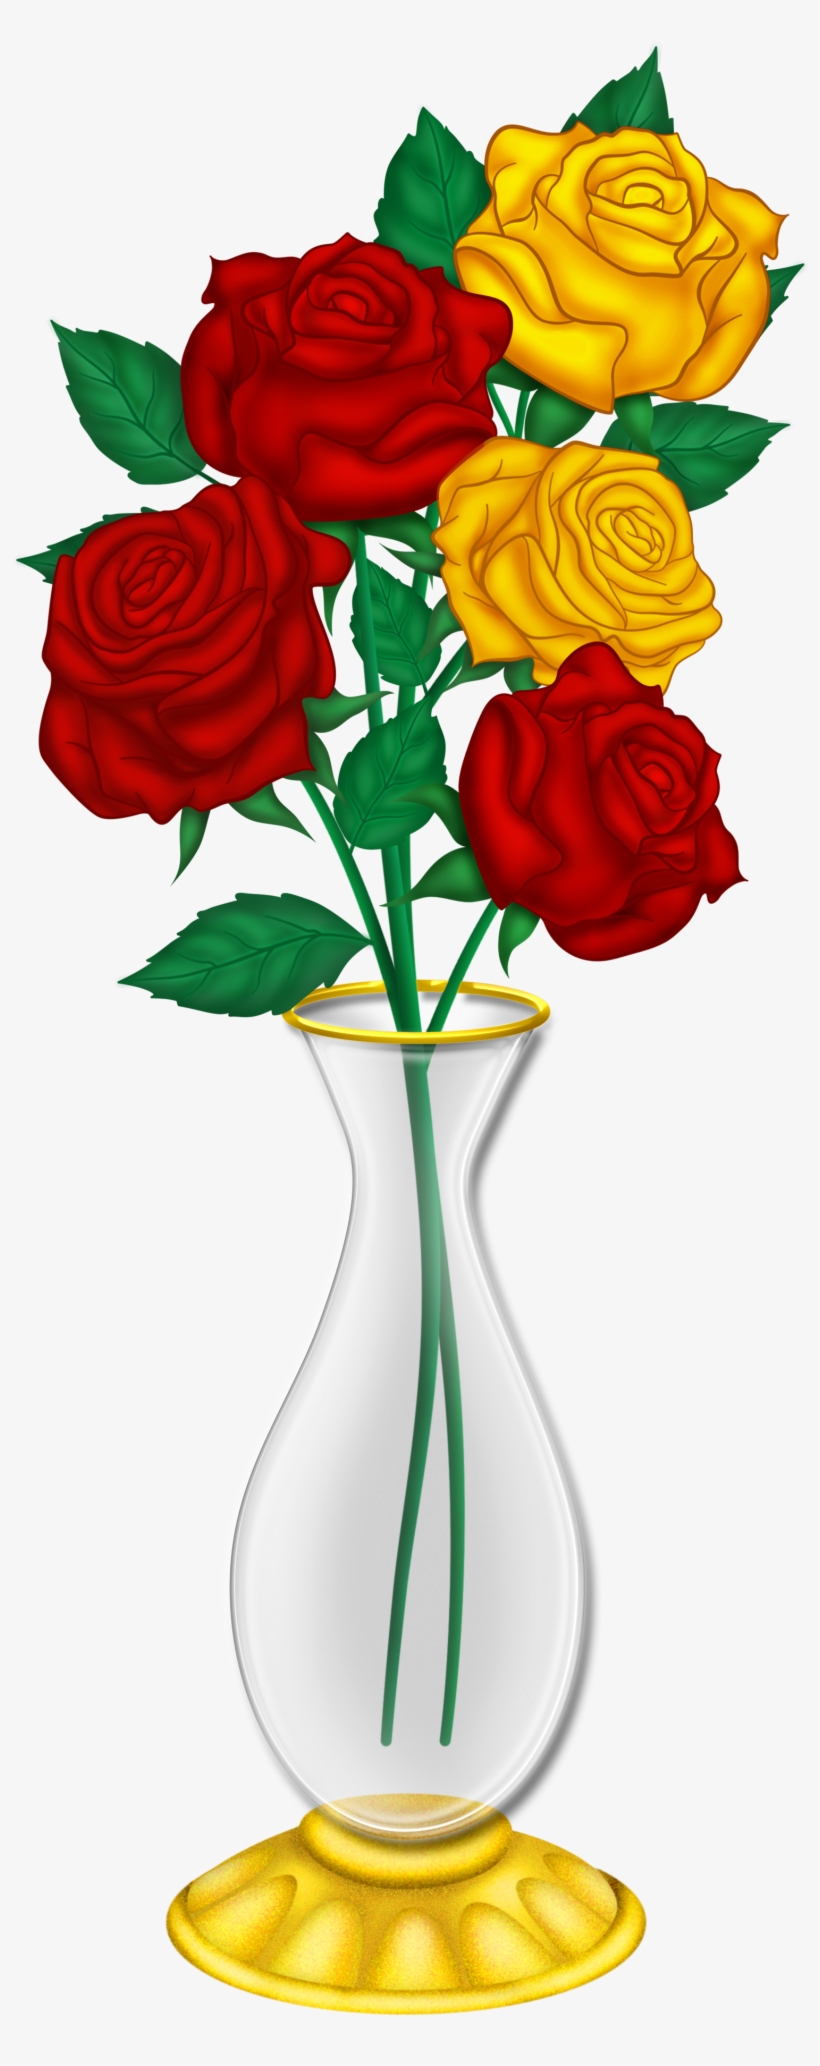 Vase Clipart At Getdrawings - Flower Vase Clipart Png, transparent png #766391